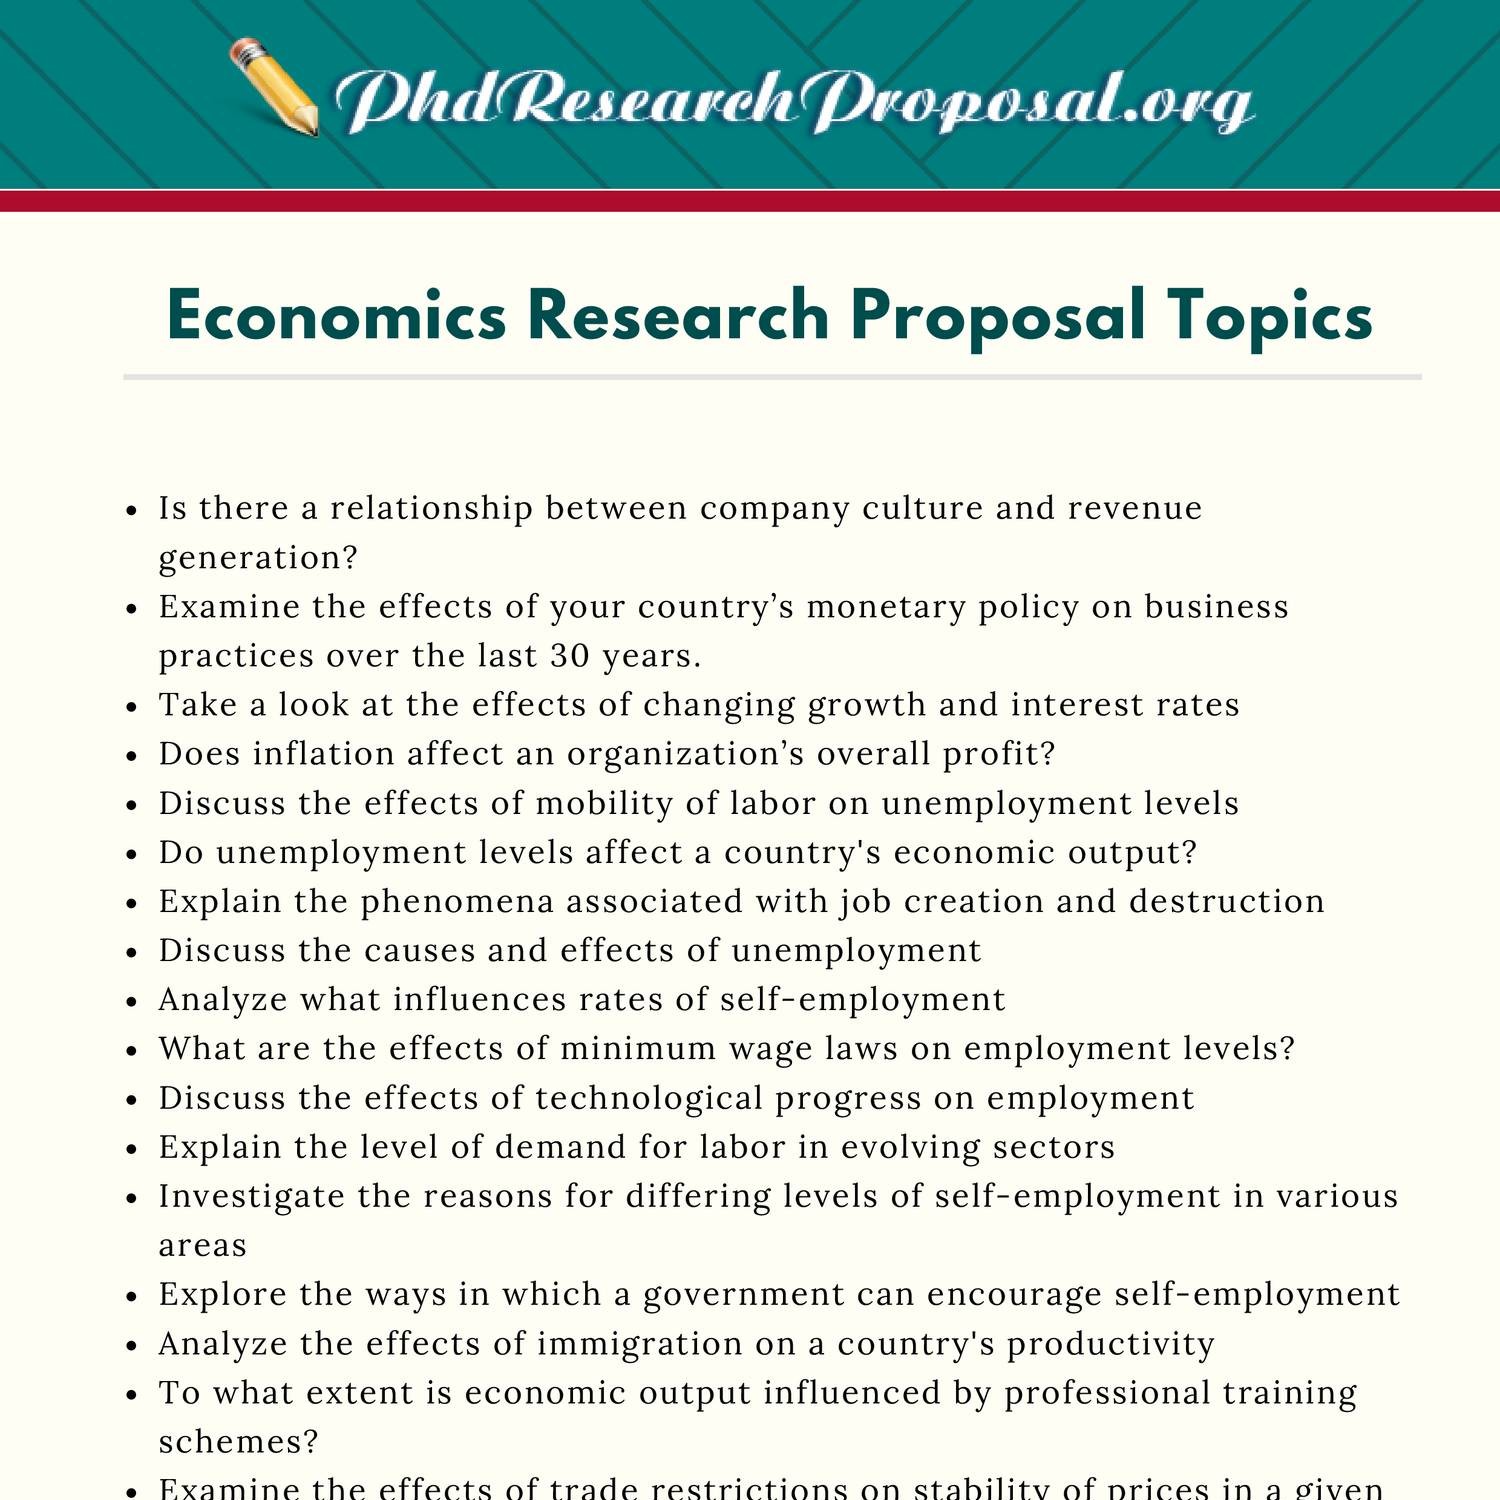 research topics on economic conditions